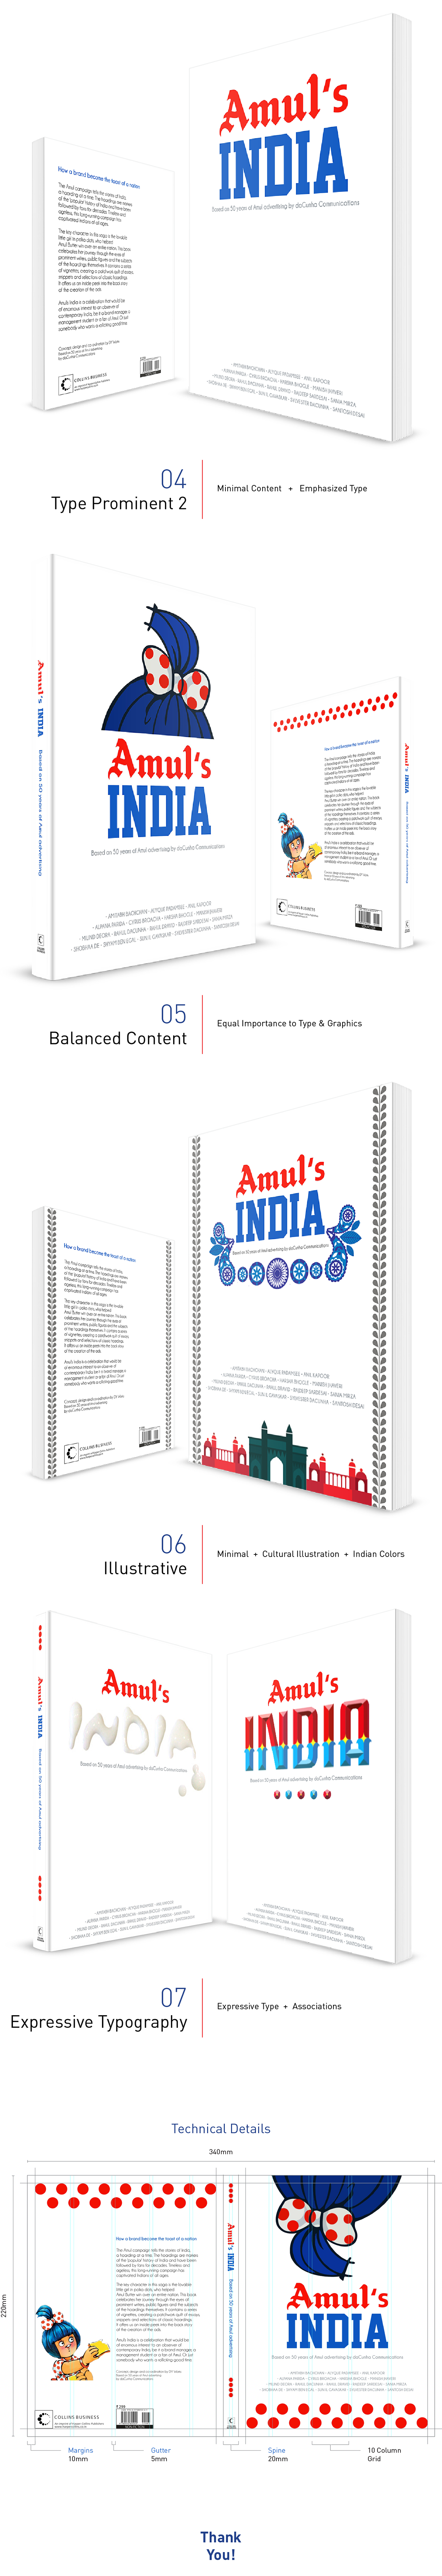 book cover Amul India redesign